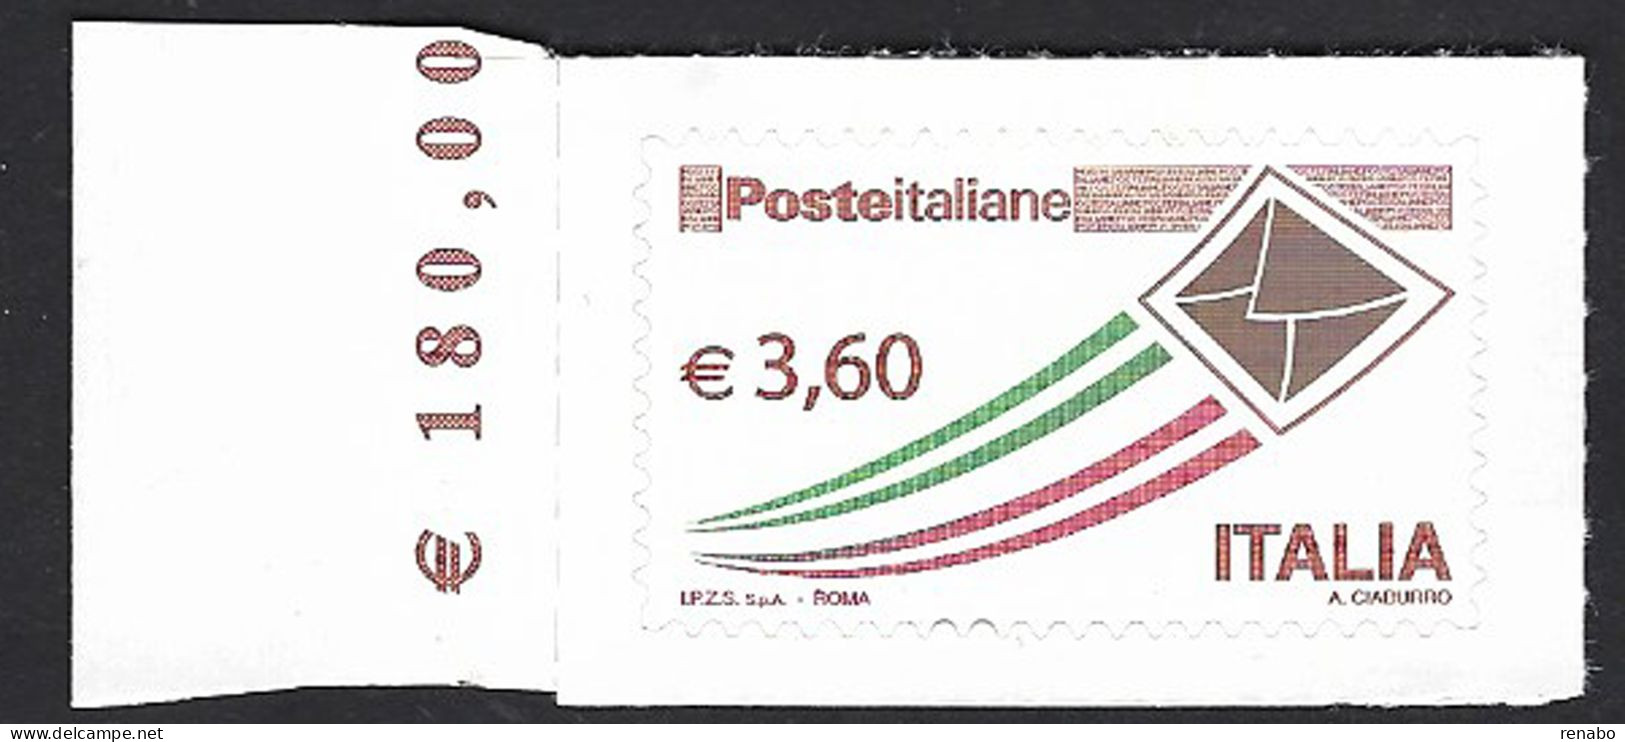 Italia 2013; Posta Italiana Busta Che Vola Da € 3,60 ; Bordo Sinistro. - 2011-20: Mint/hinged